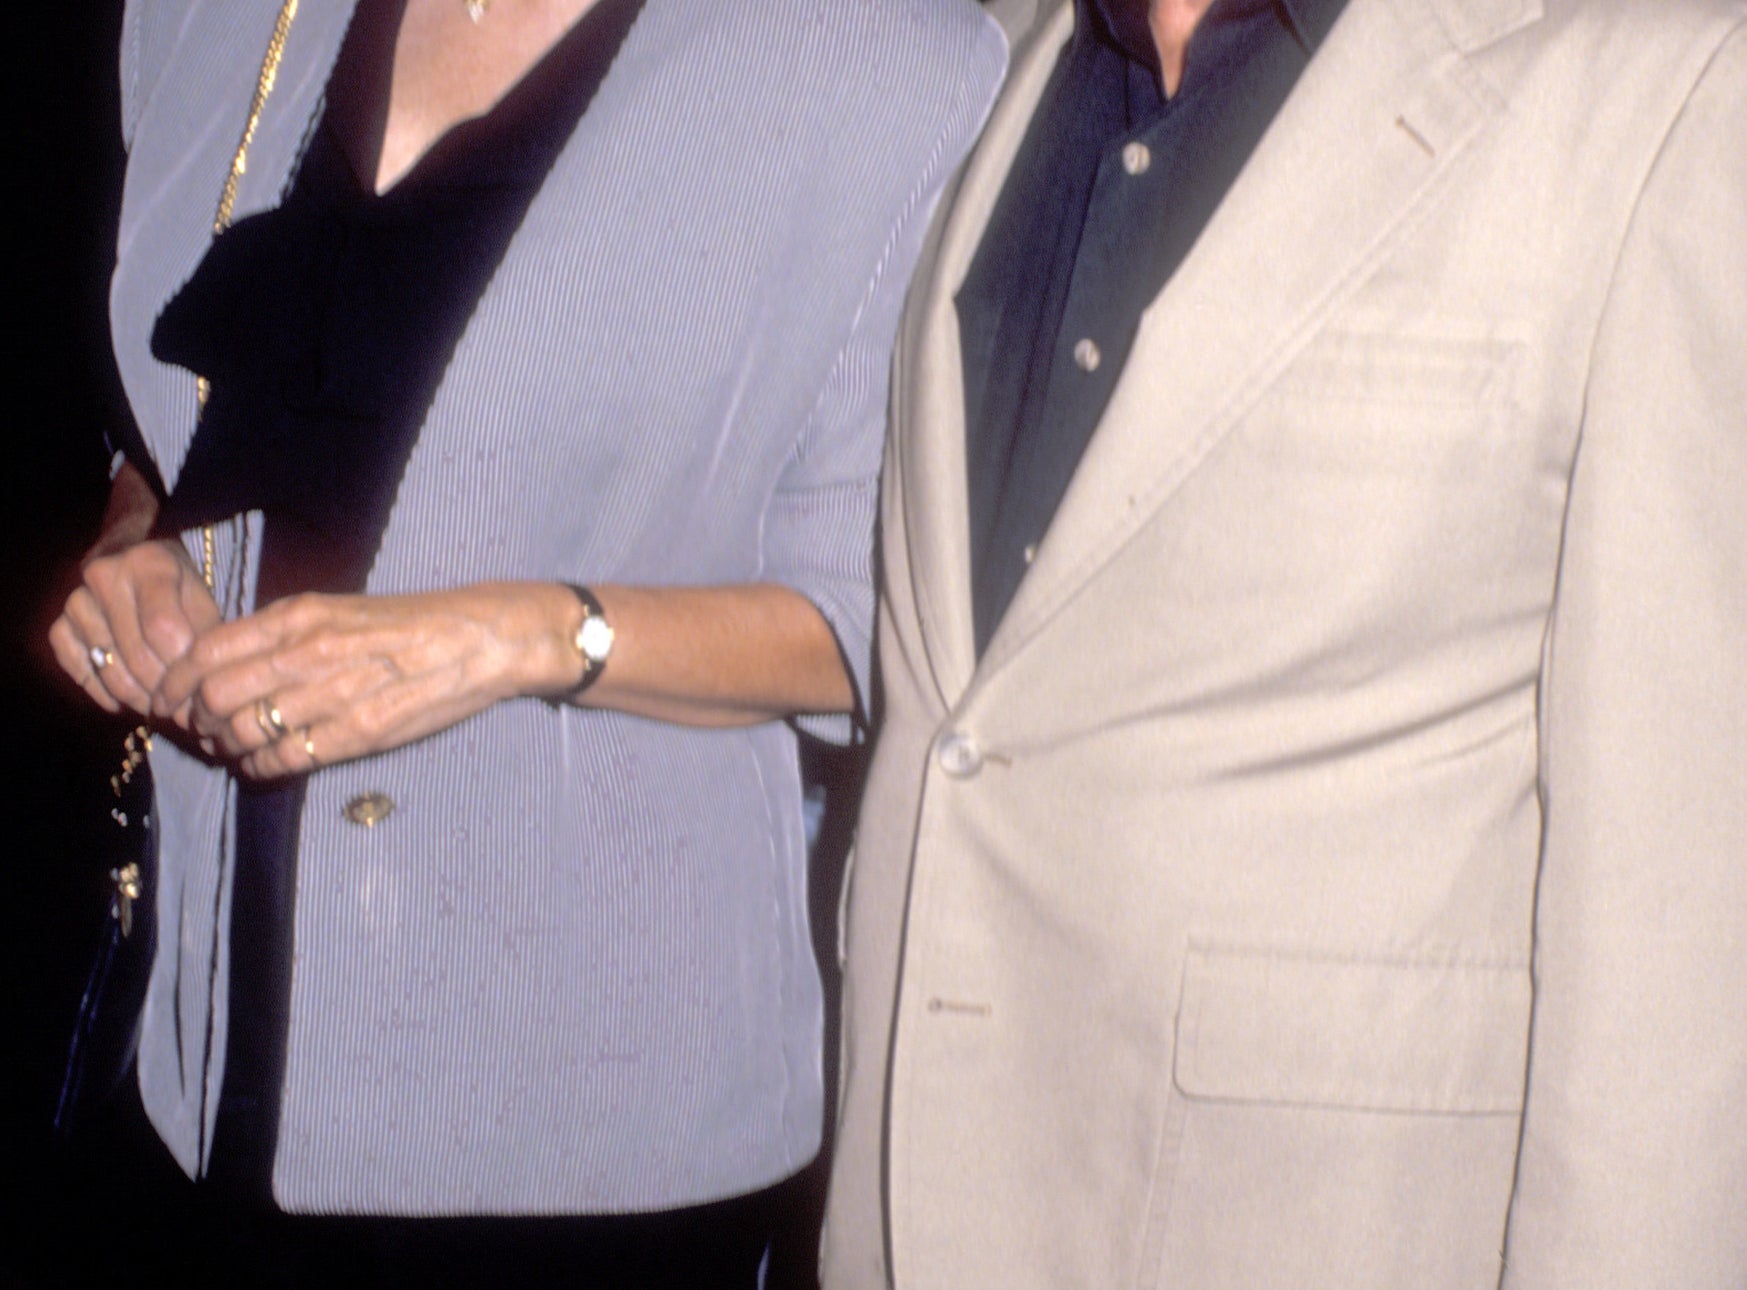 Bonnie Bartlett and William Daniels smiling